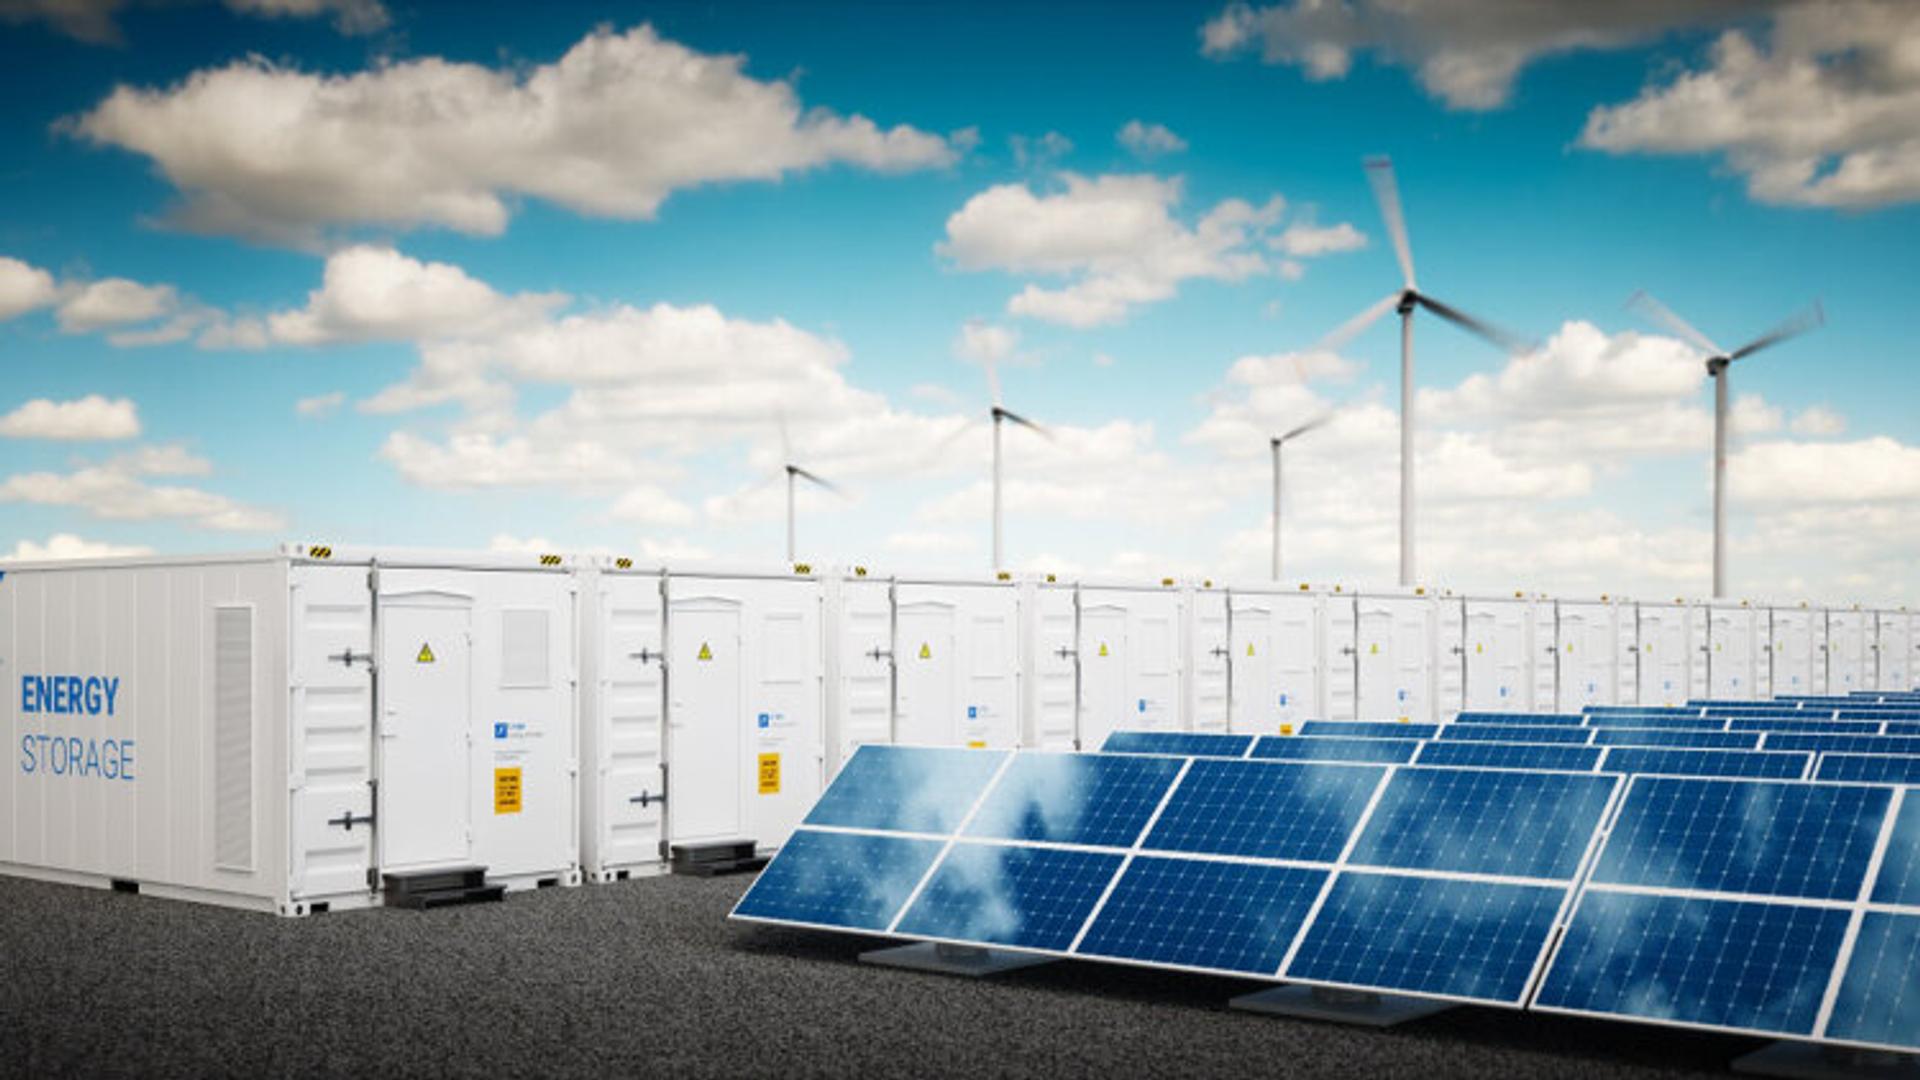 Solar panels, energy storage and windmills